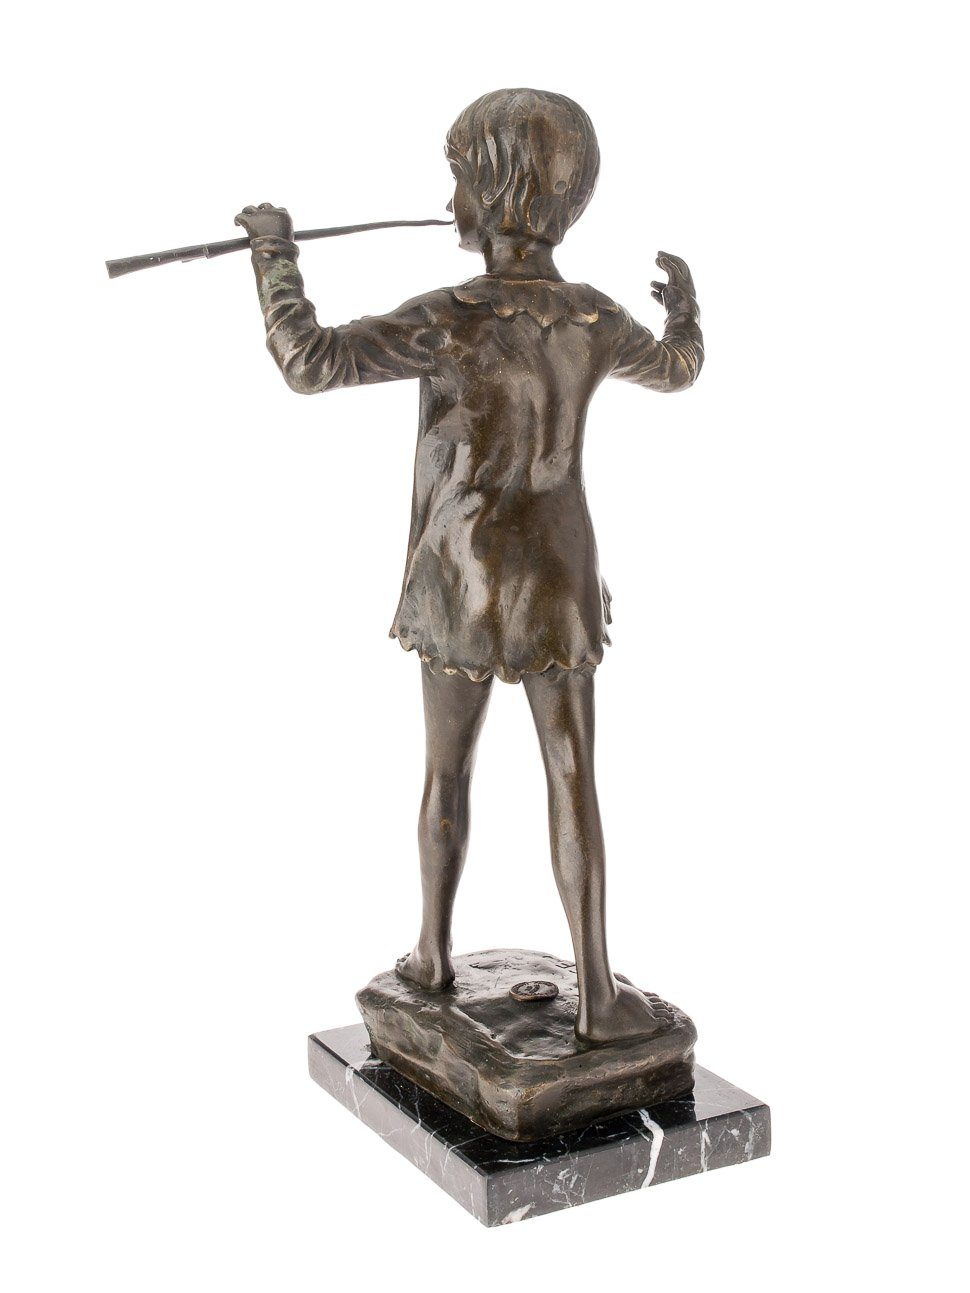 Aubaho Skulptur Bronzeskulptur Skulptur nach Pan Re Bronze George Figur Peter Frampton